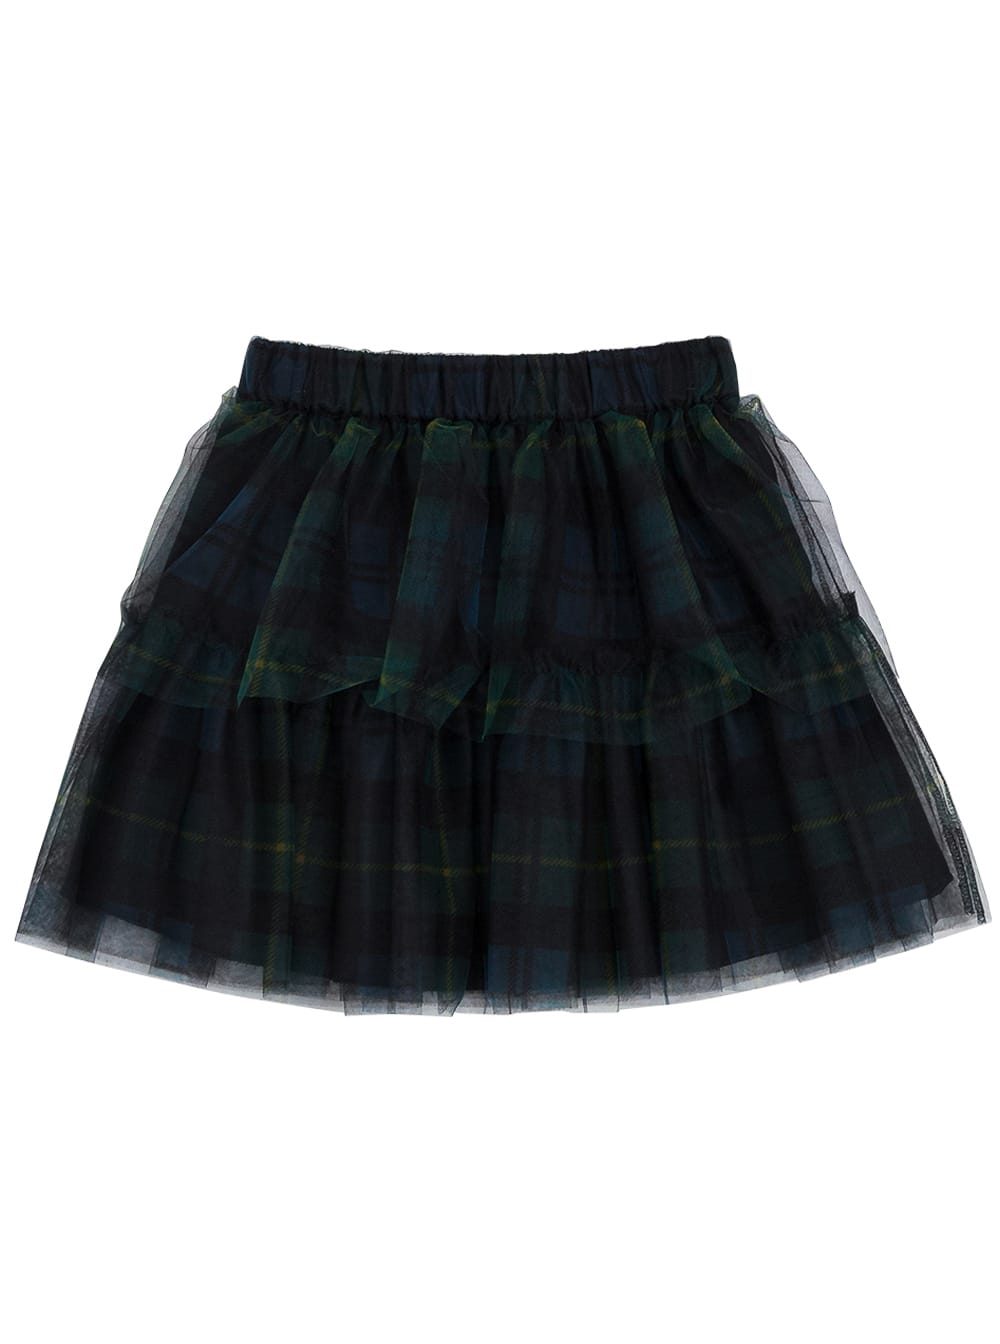 Philosophy di Lorenzo Serafini Kids Check Tulle Skirt With Flounces